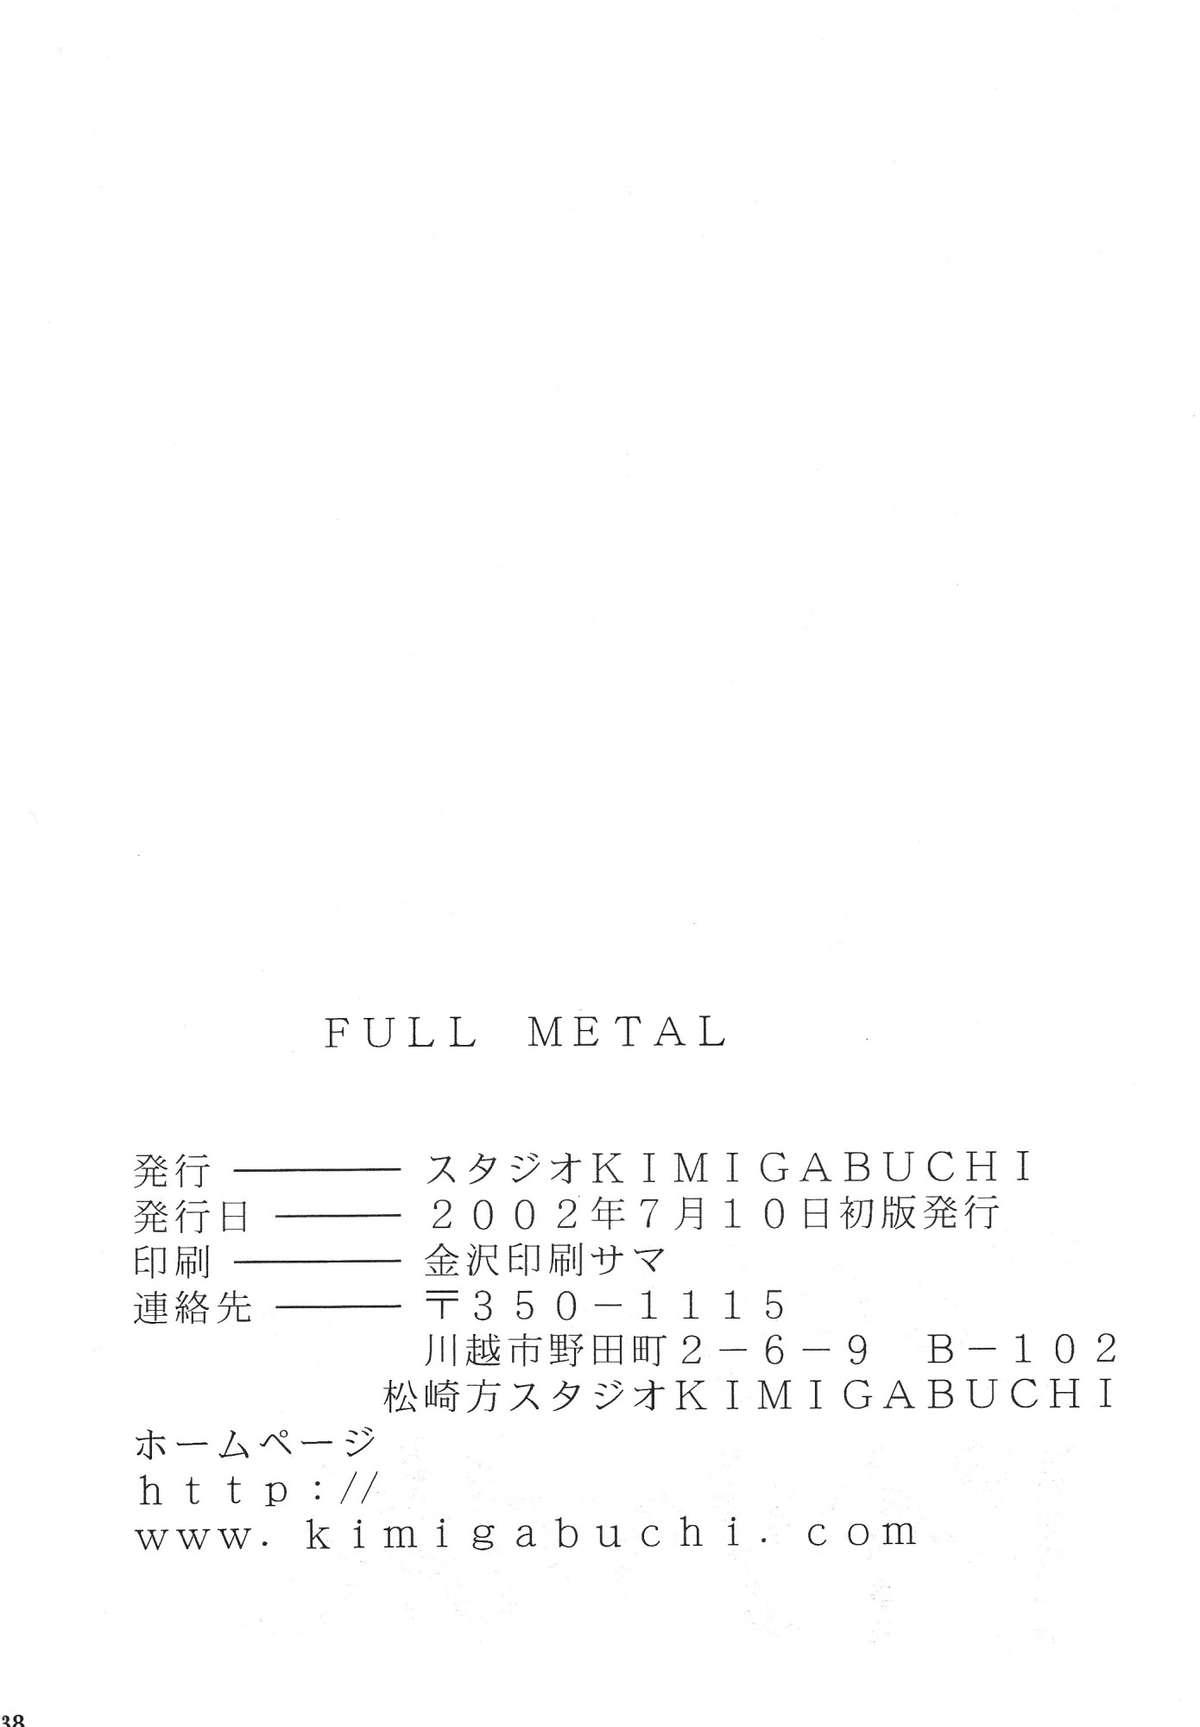 Hotel FULL METAL - Full metal panic Safadinha - Page 39